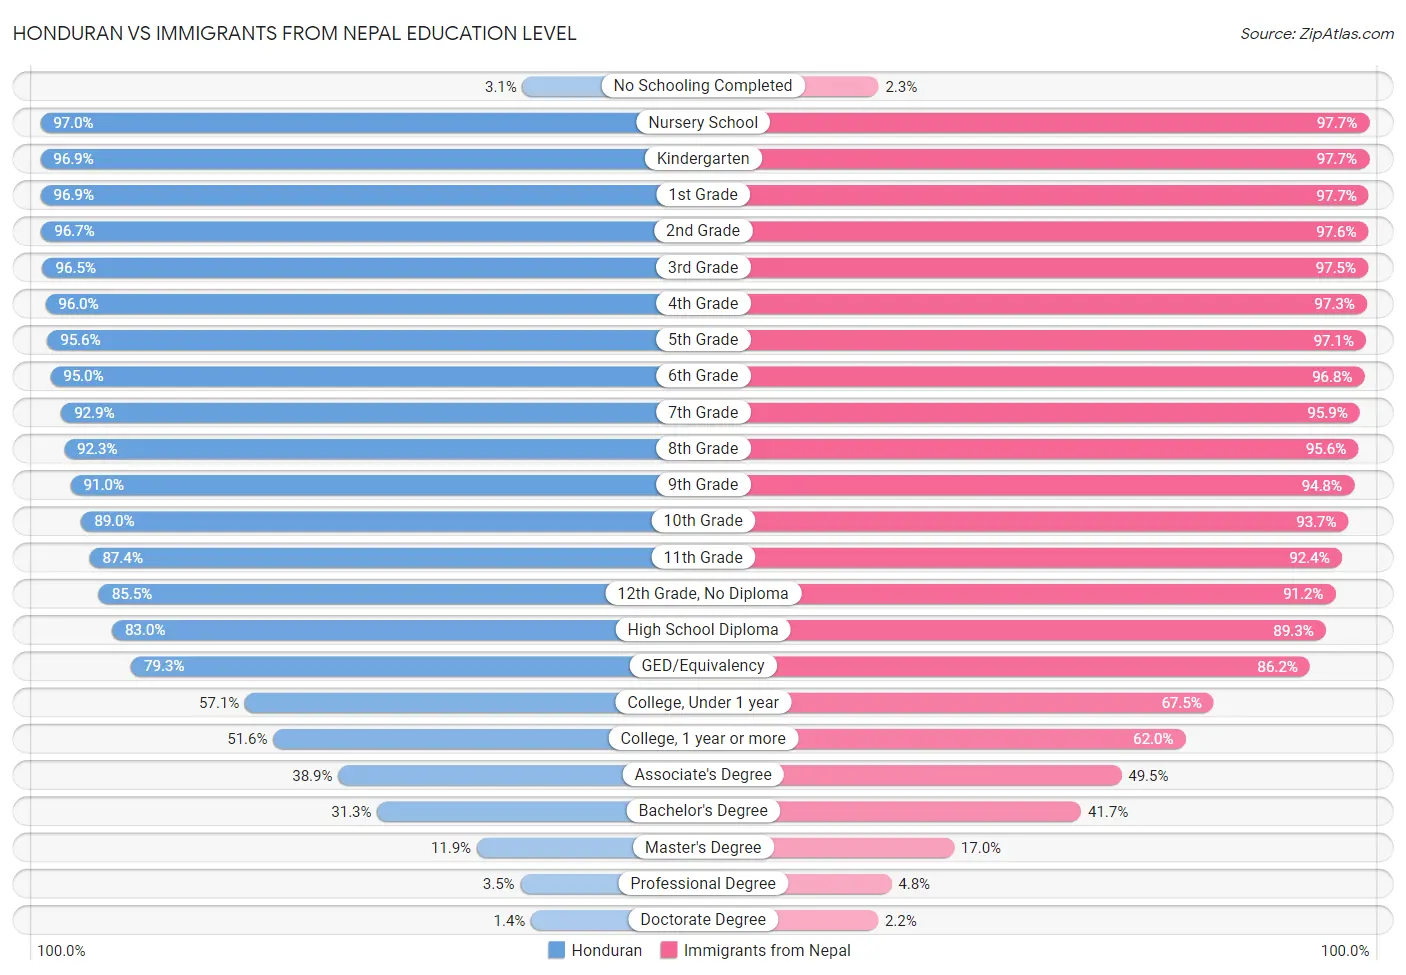 Honduran vs Immigrants from Nepal Education Level